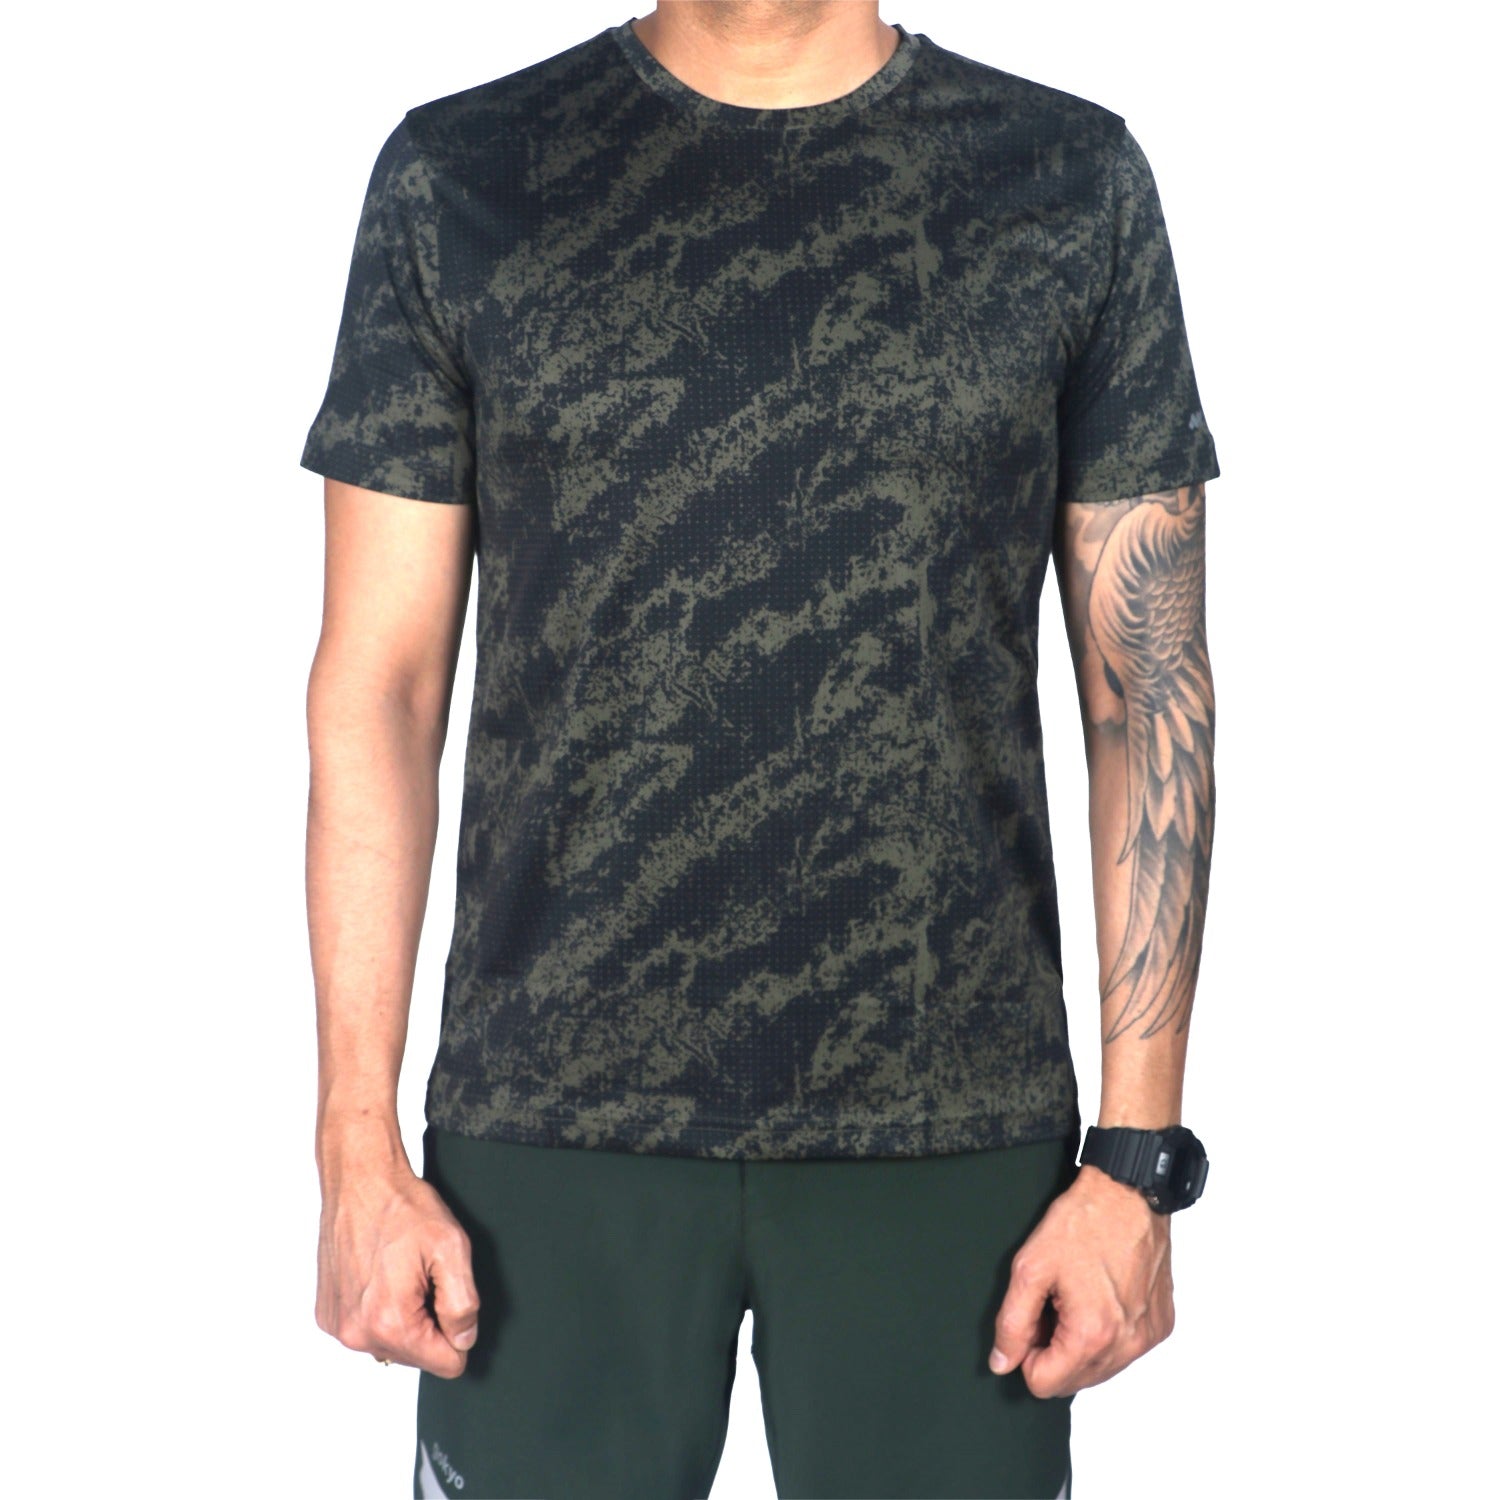 Buy Gokyo Corbett Tshirt | Trekking & Hiking T-shirts at Gokyo Outdoor Clothing & Gear